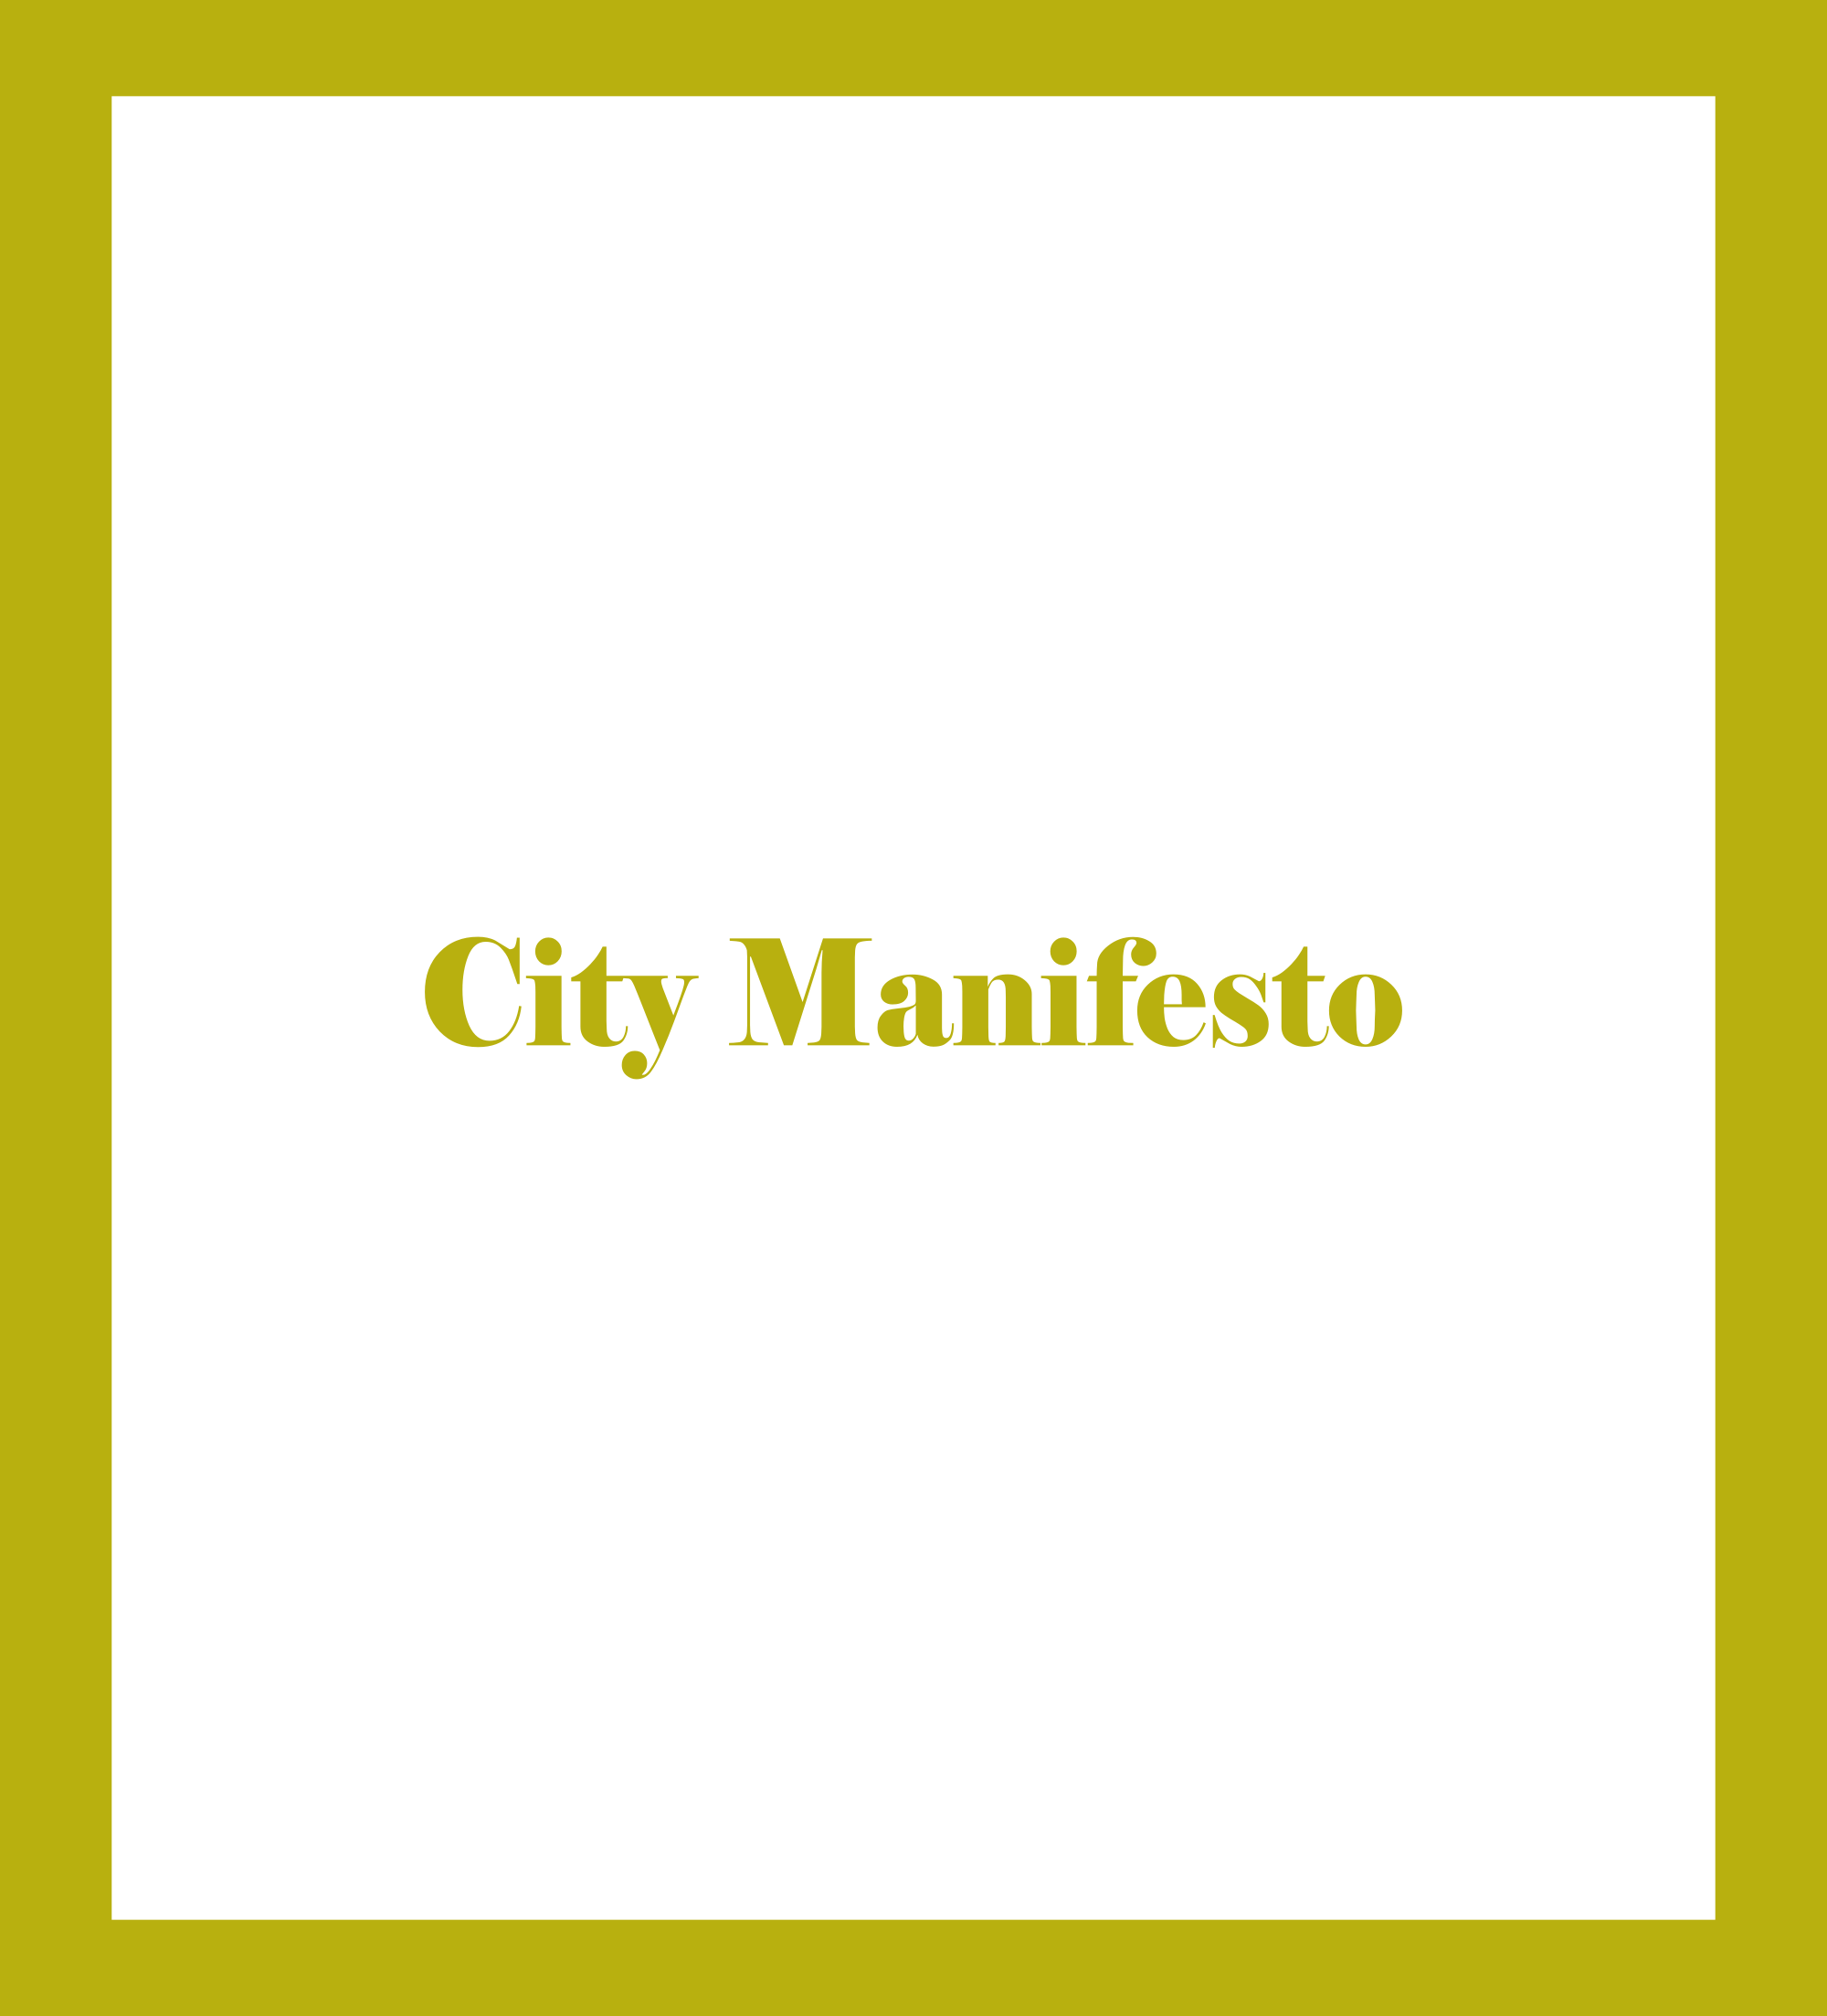 Caratula de City Manifesto (City Manifesto) 